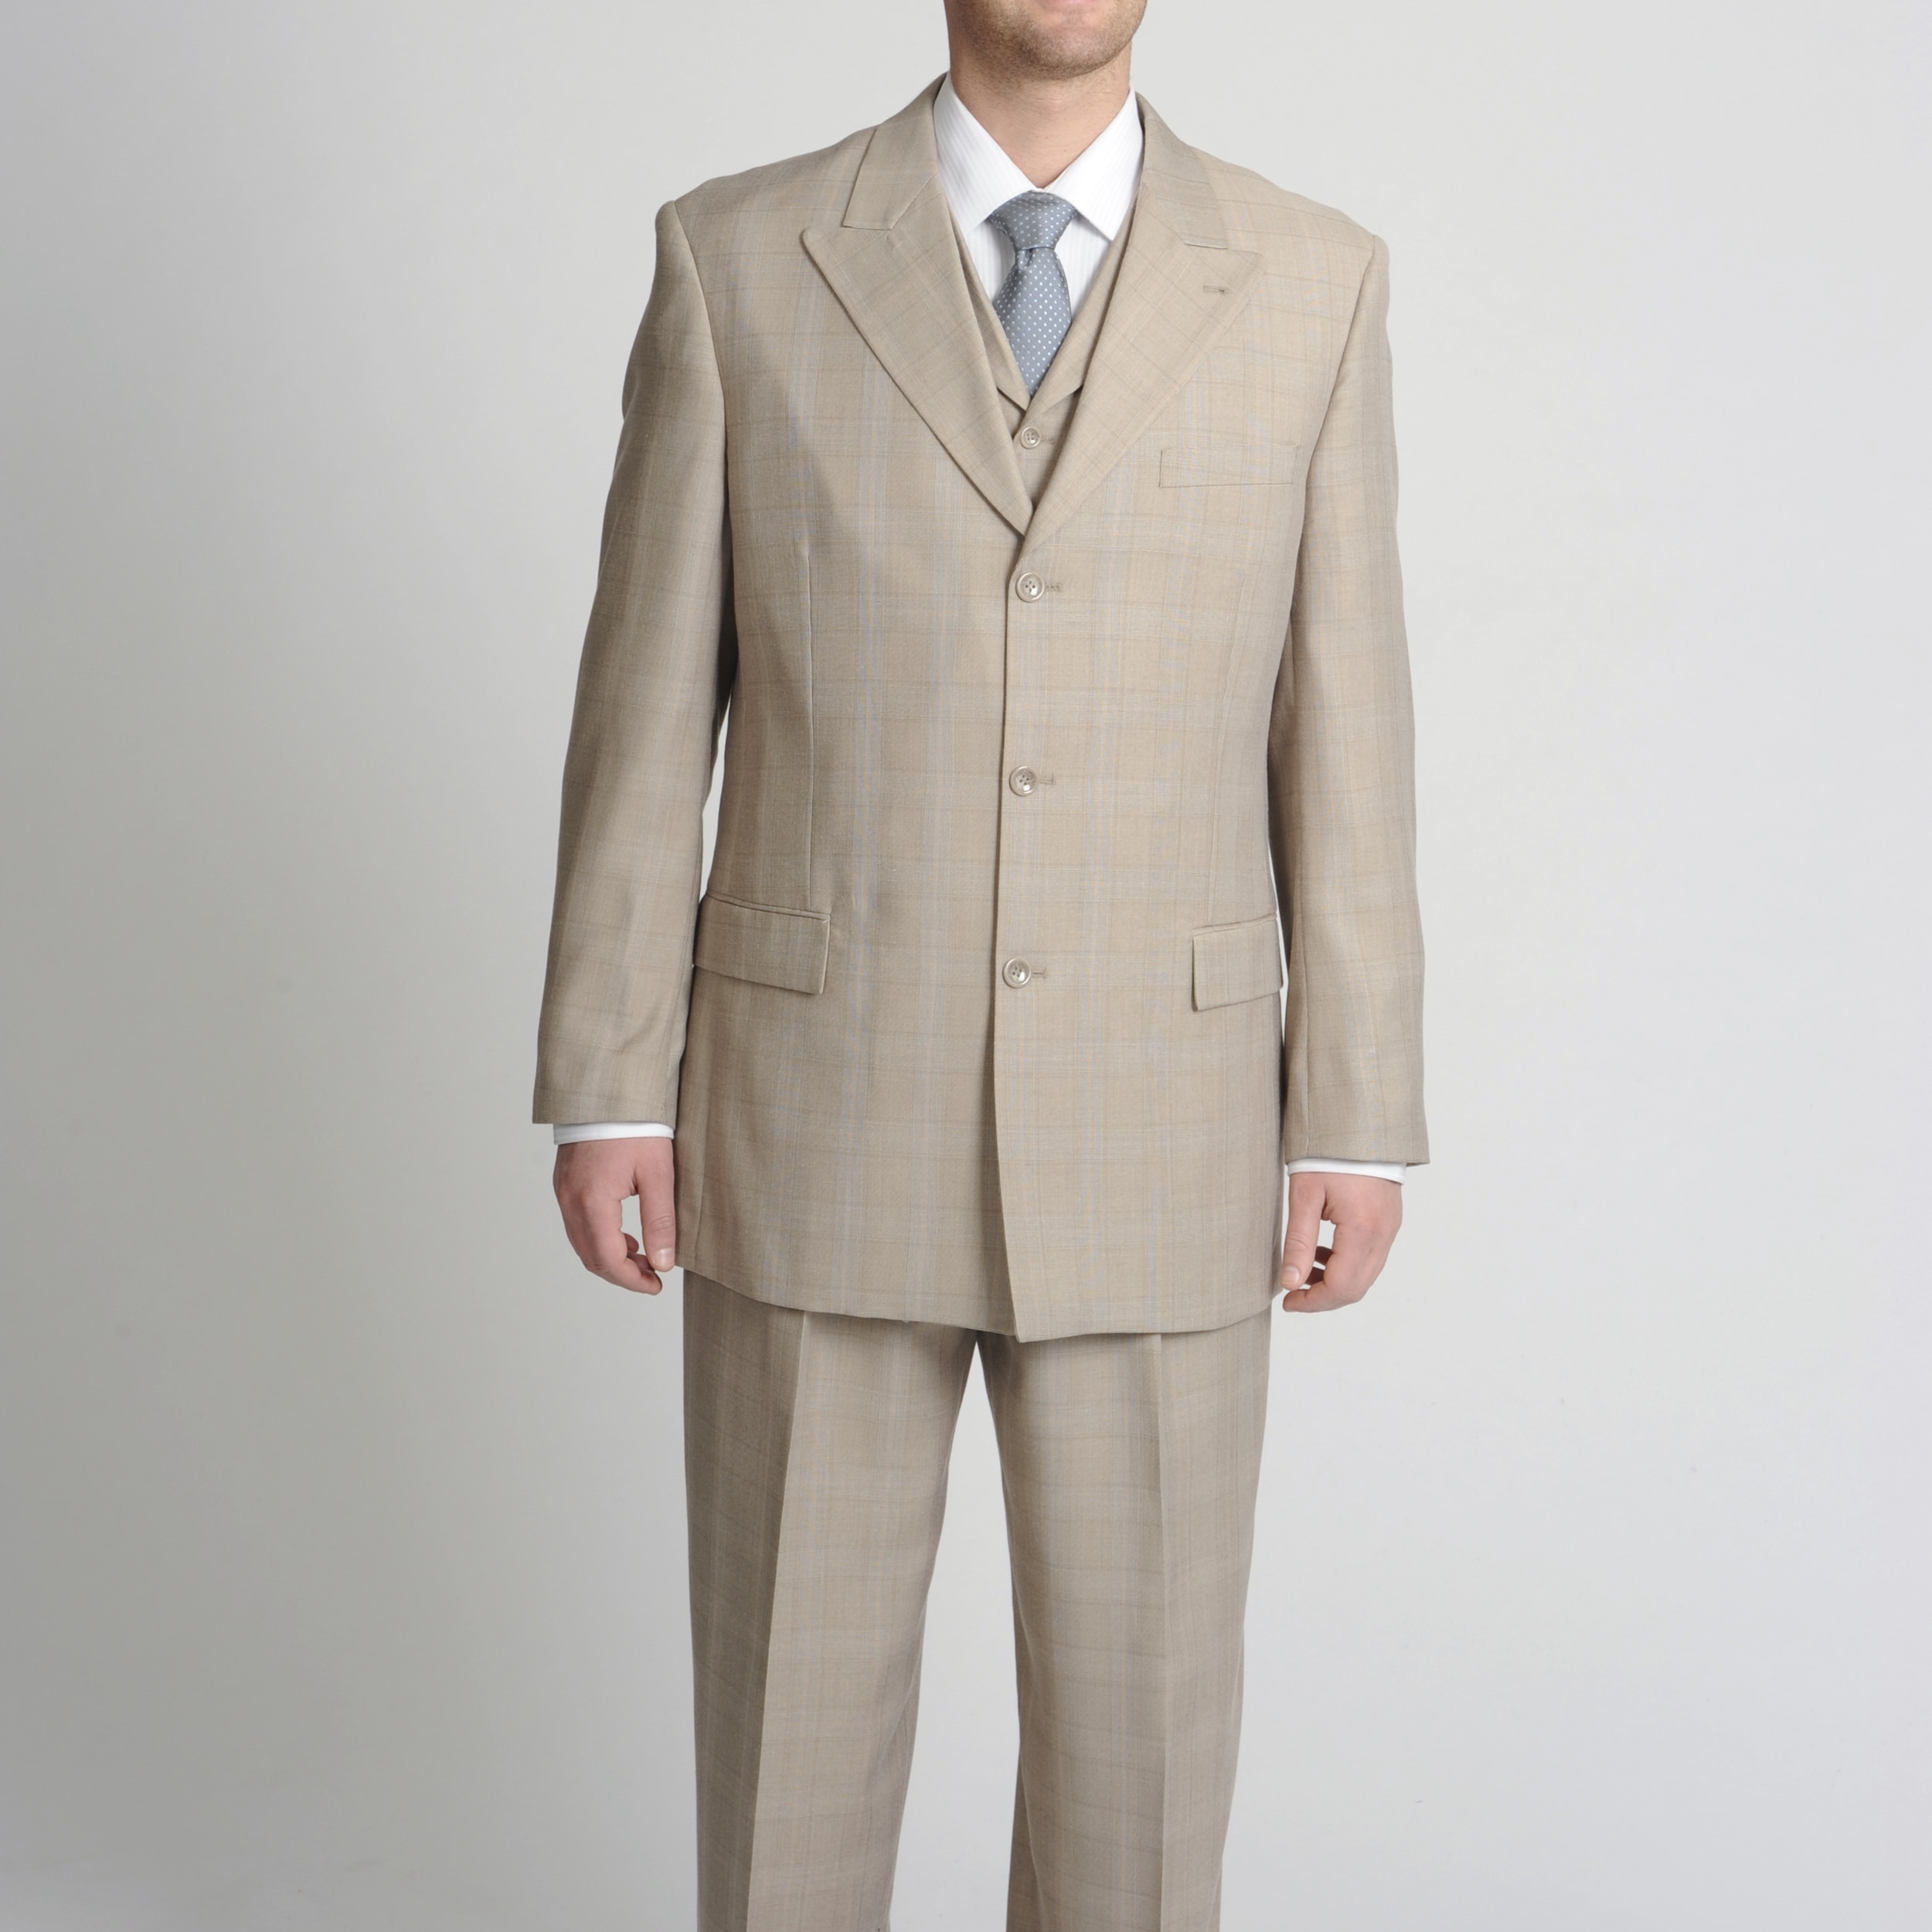 Caravelli Fusion Mens Tan Tonal Plaid Vested Suit